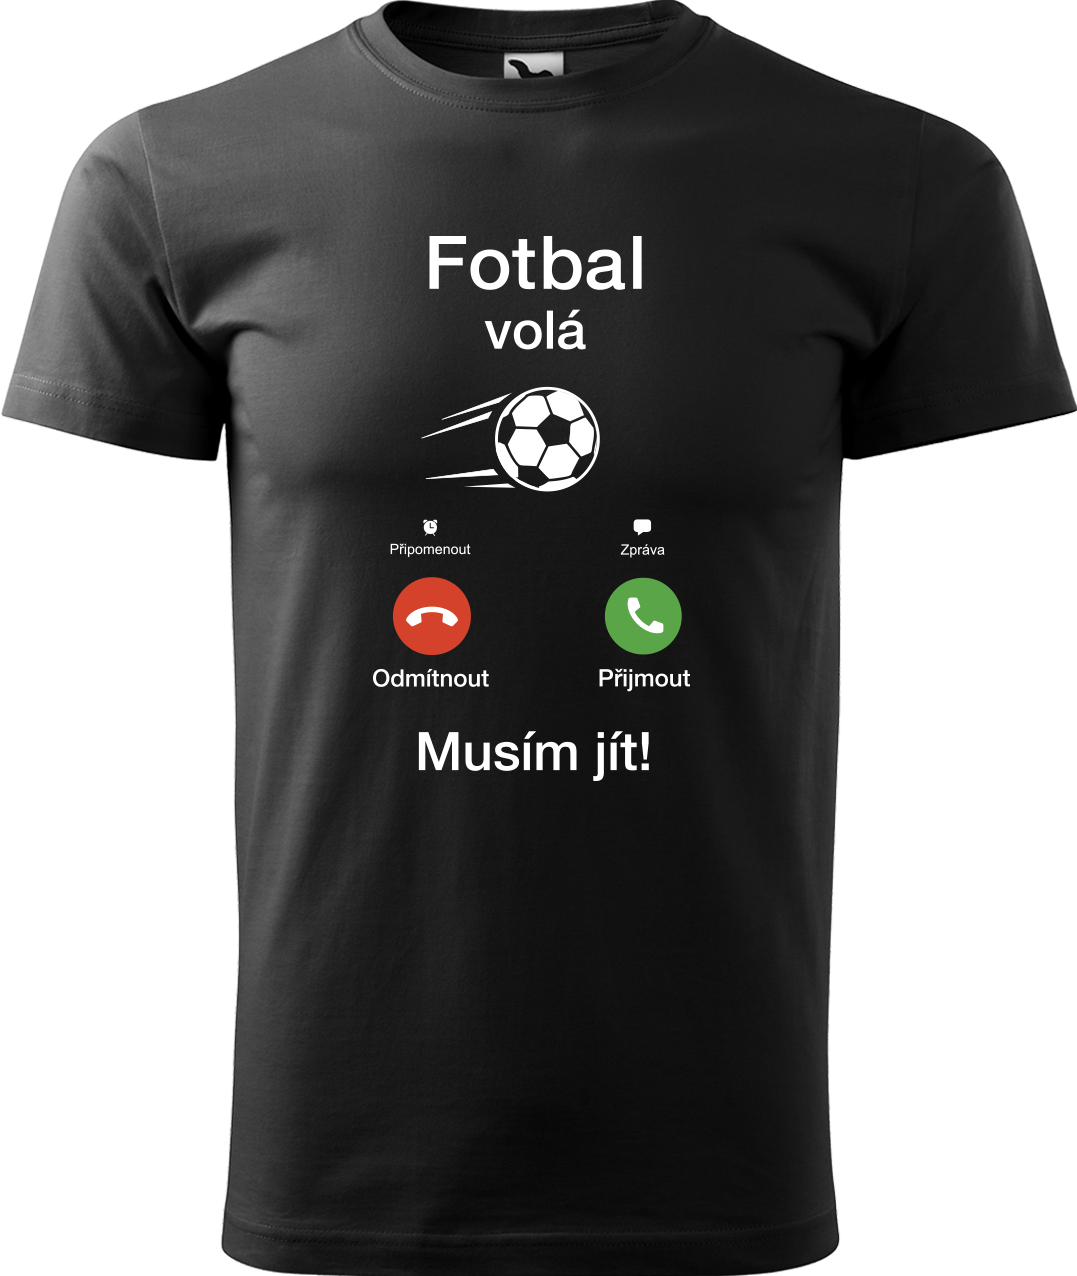 Tričko pro fotbalistu - Fotbal volá Velikost: M, Barva: Černá (01)